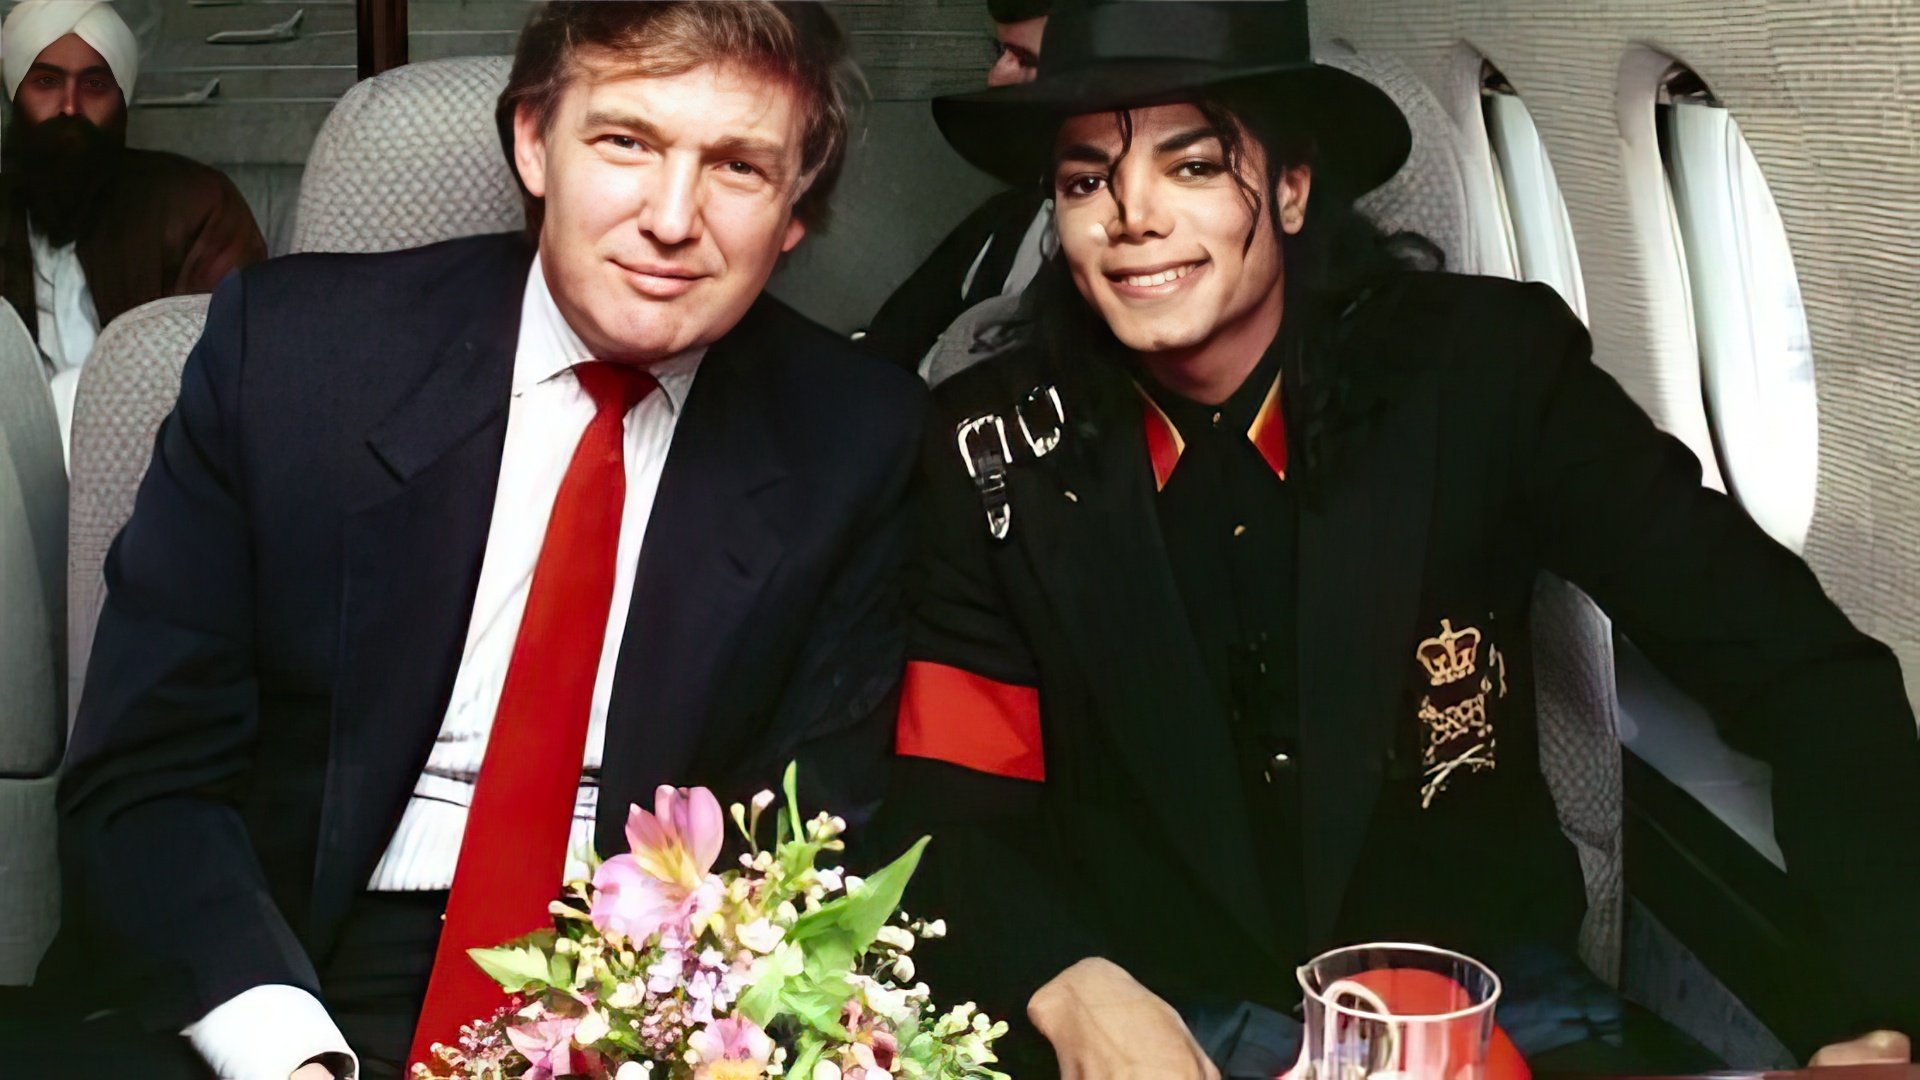 Donald Trump and Michael Jackson